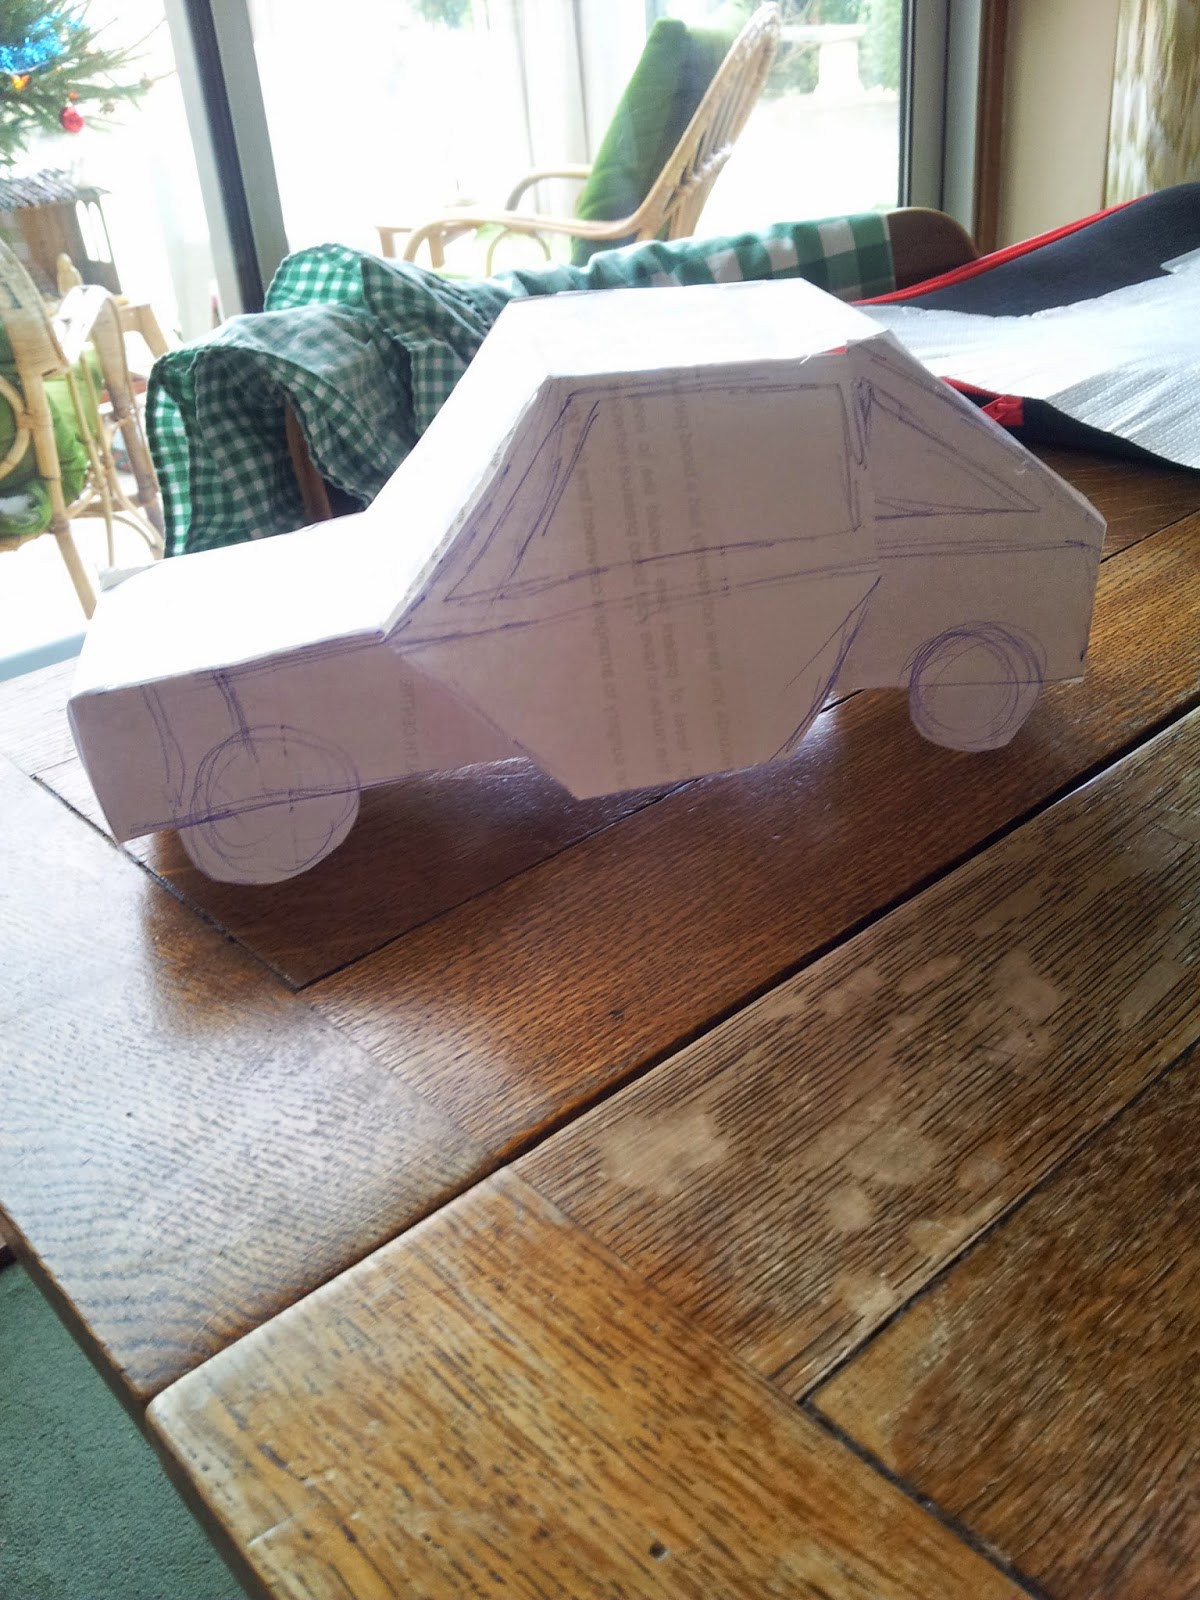 Delorean paper model, side view